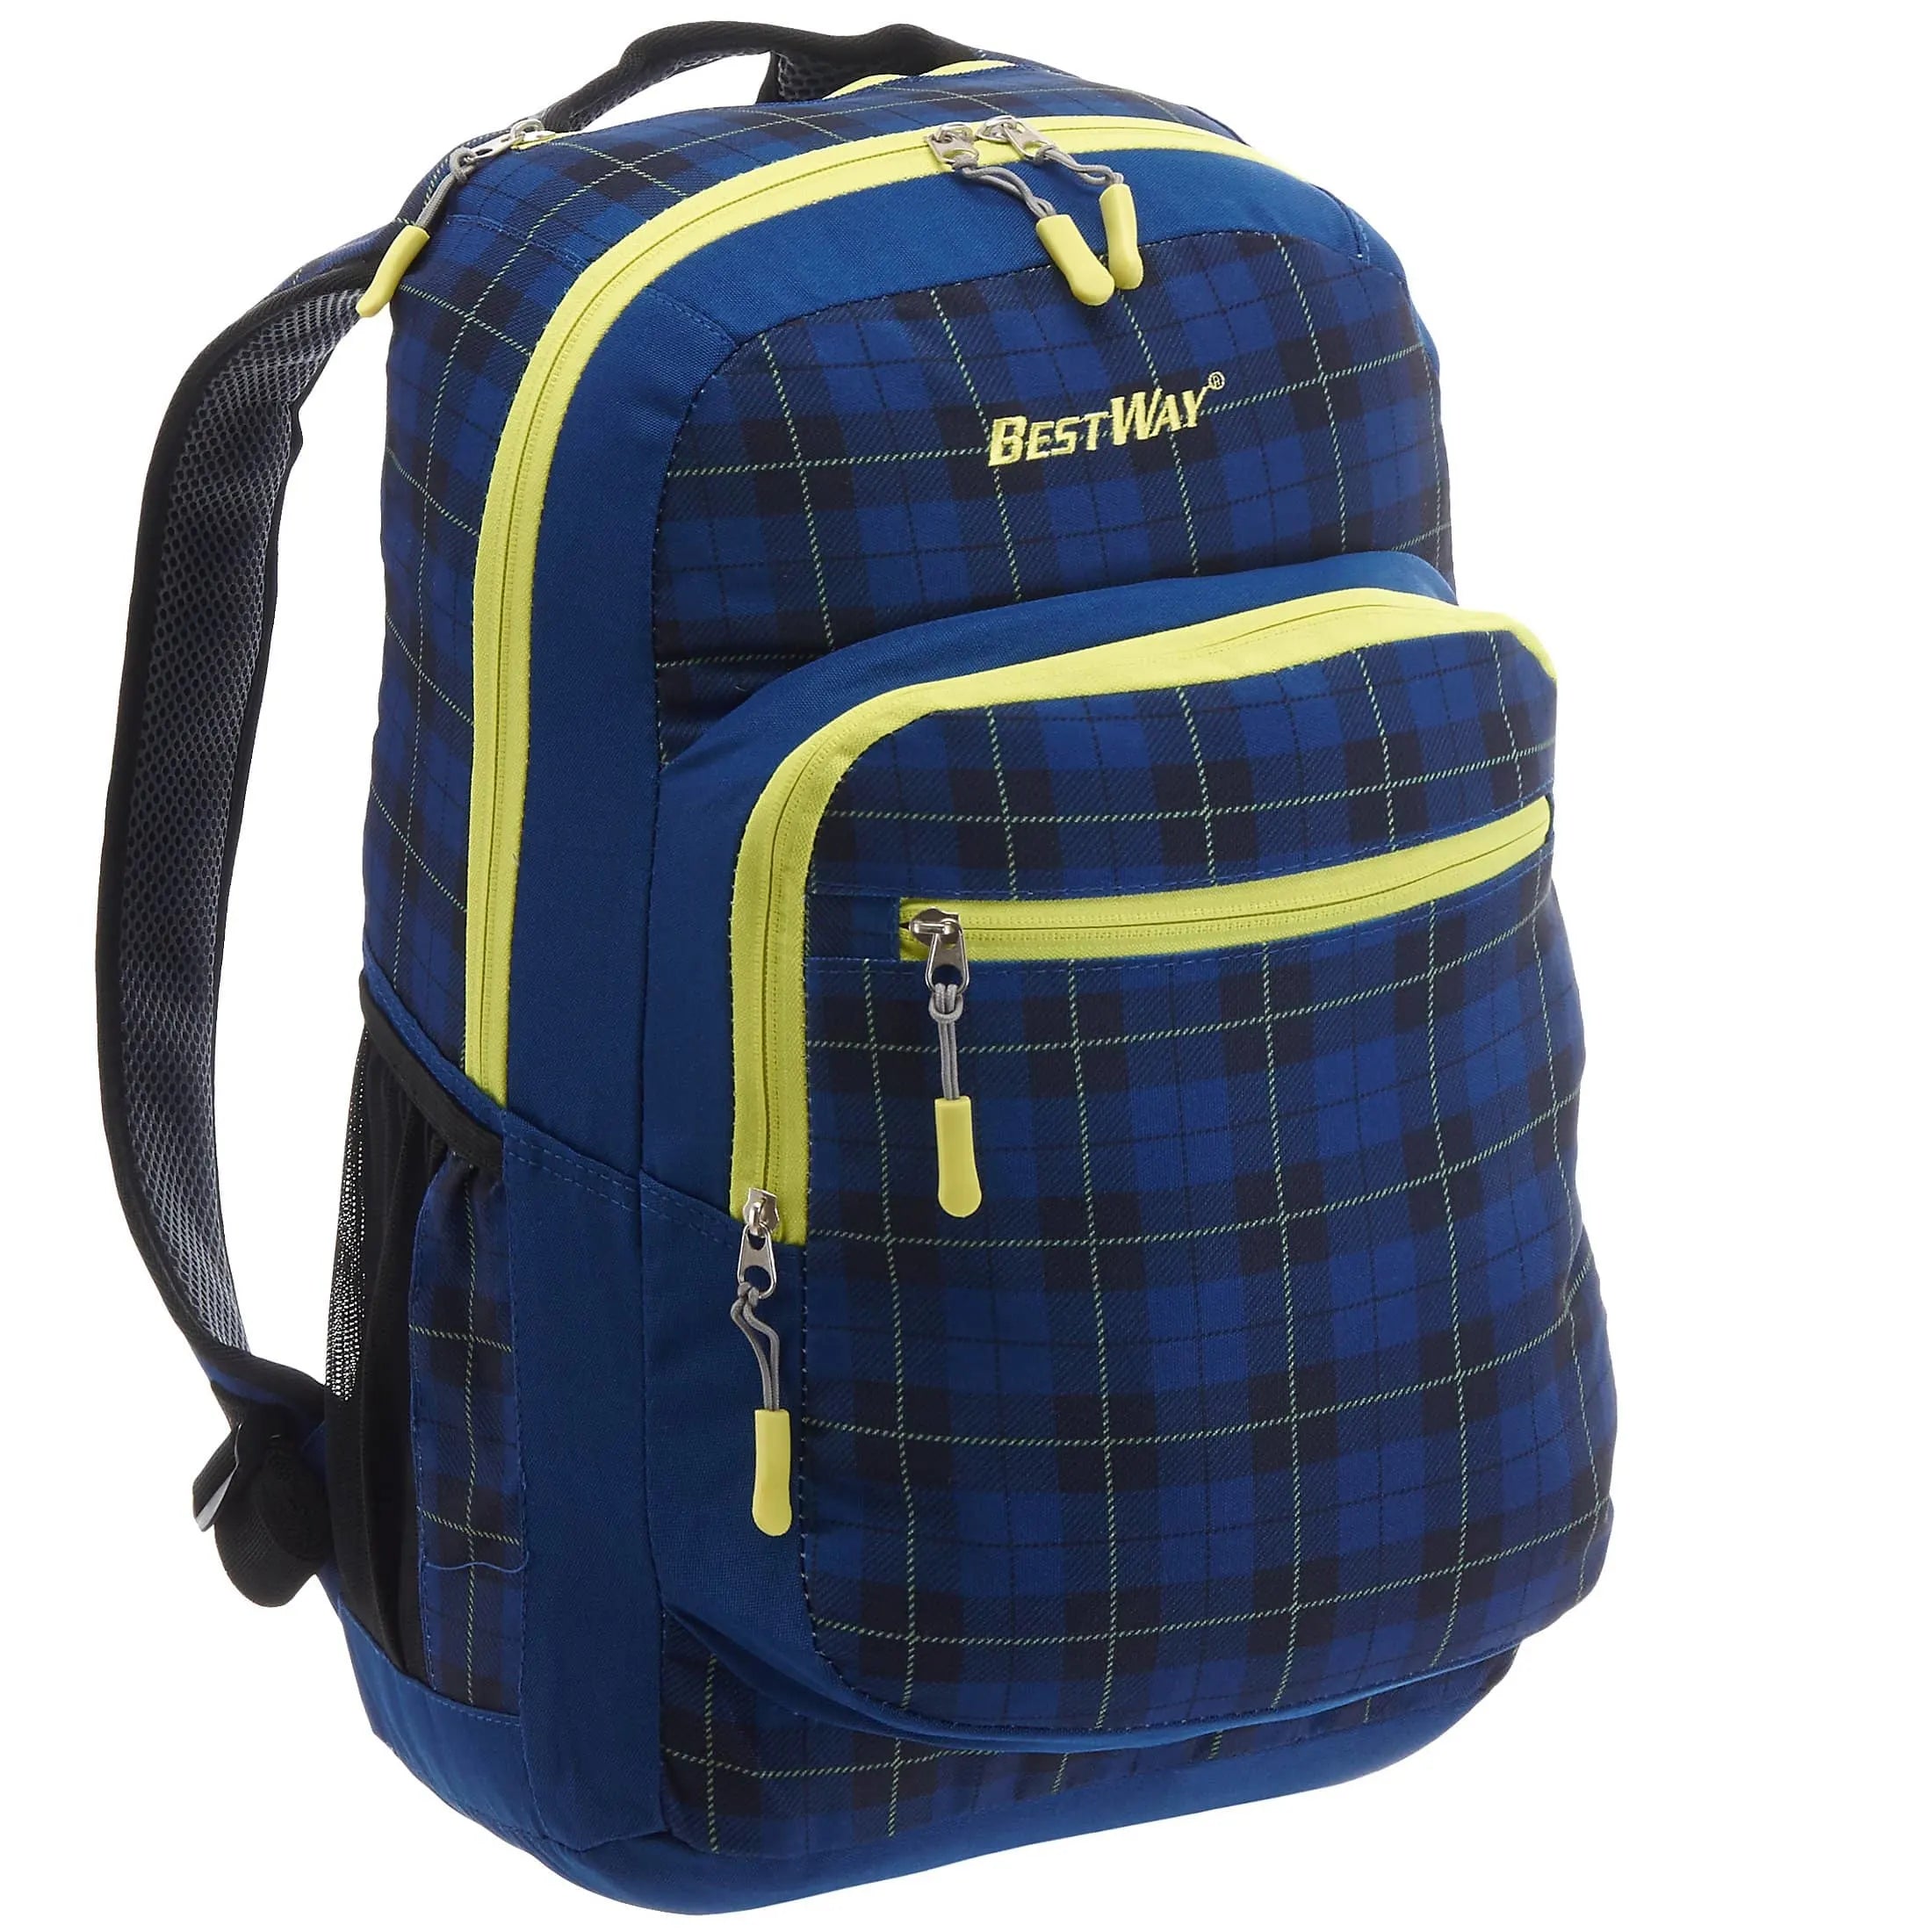 Fabrizio BestWay backpack 47 cm - royal blue/yellow